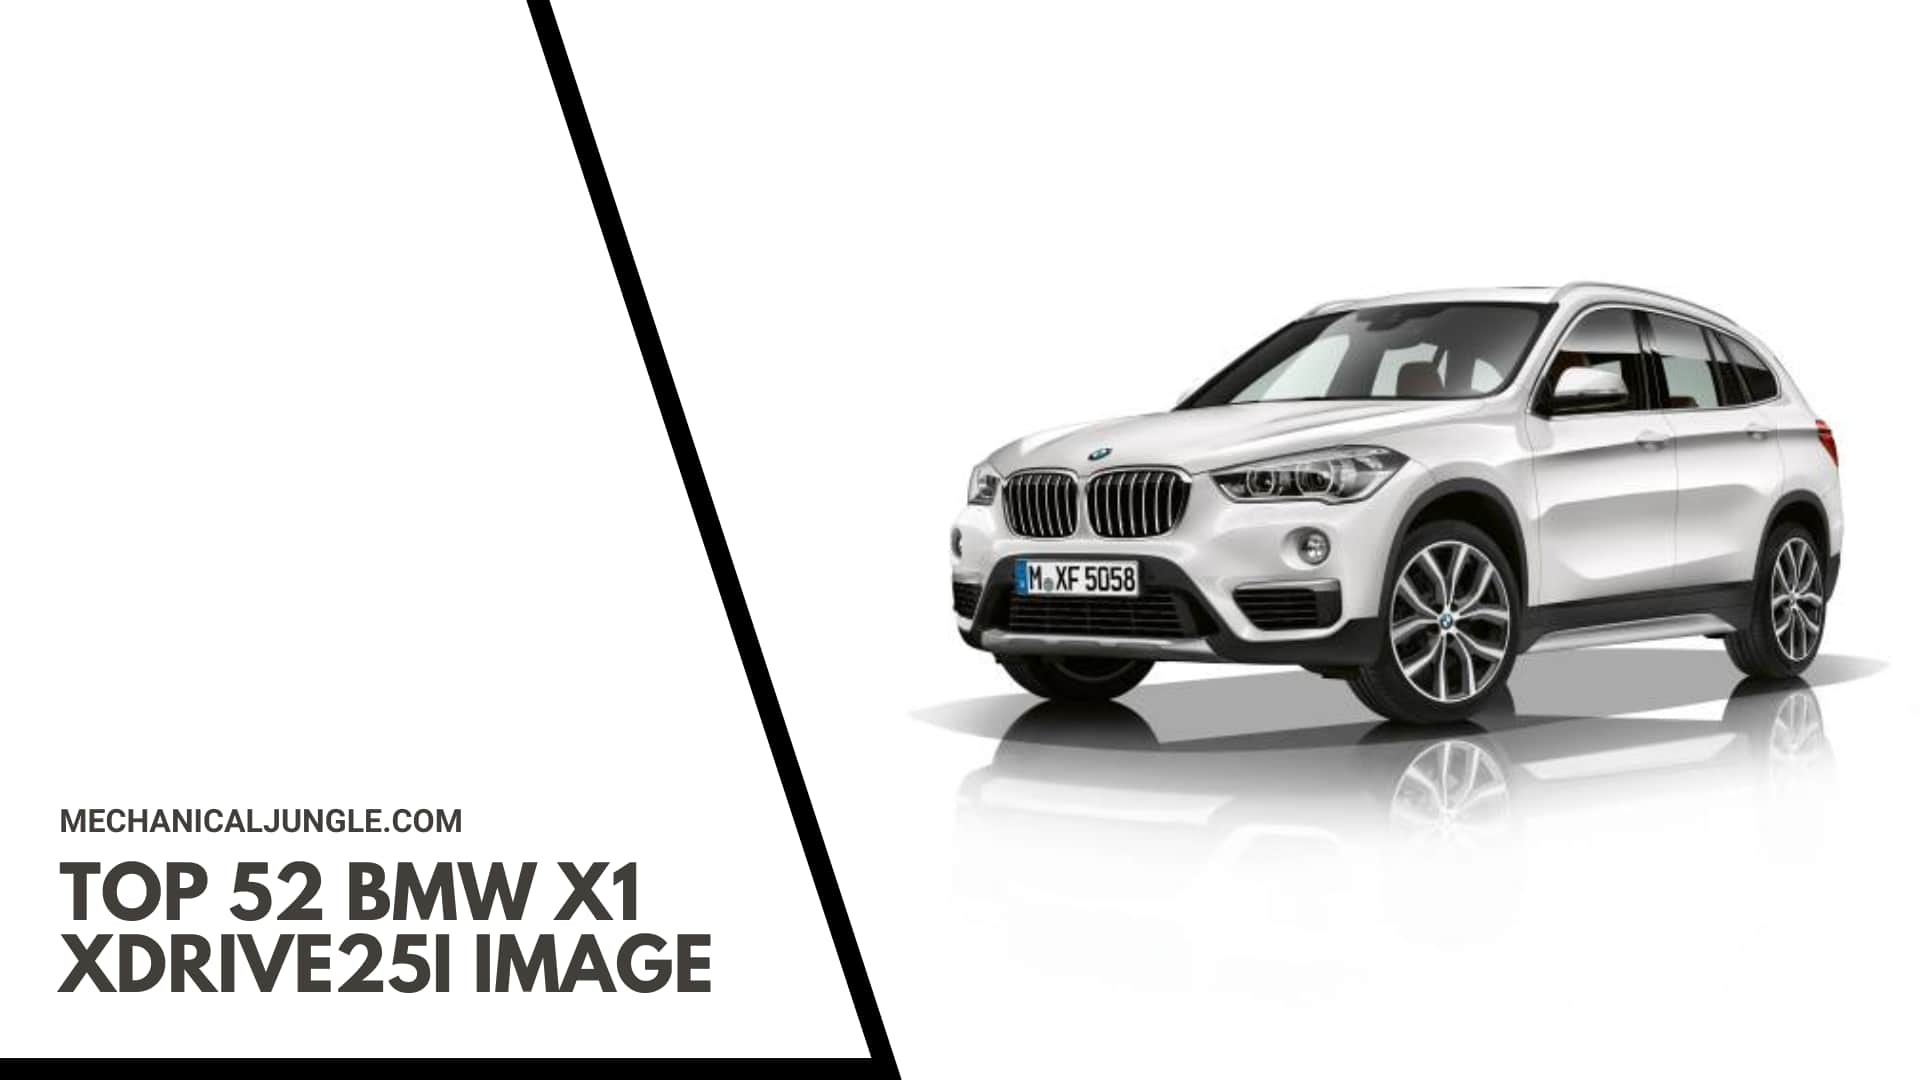 Top 52 BMW X1 xDrive25i Image